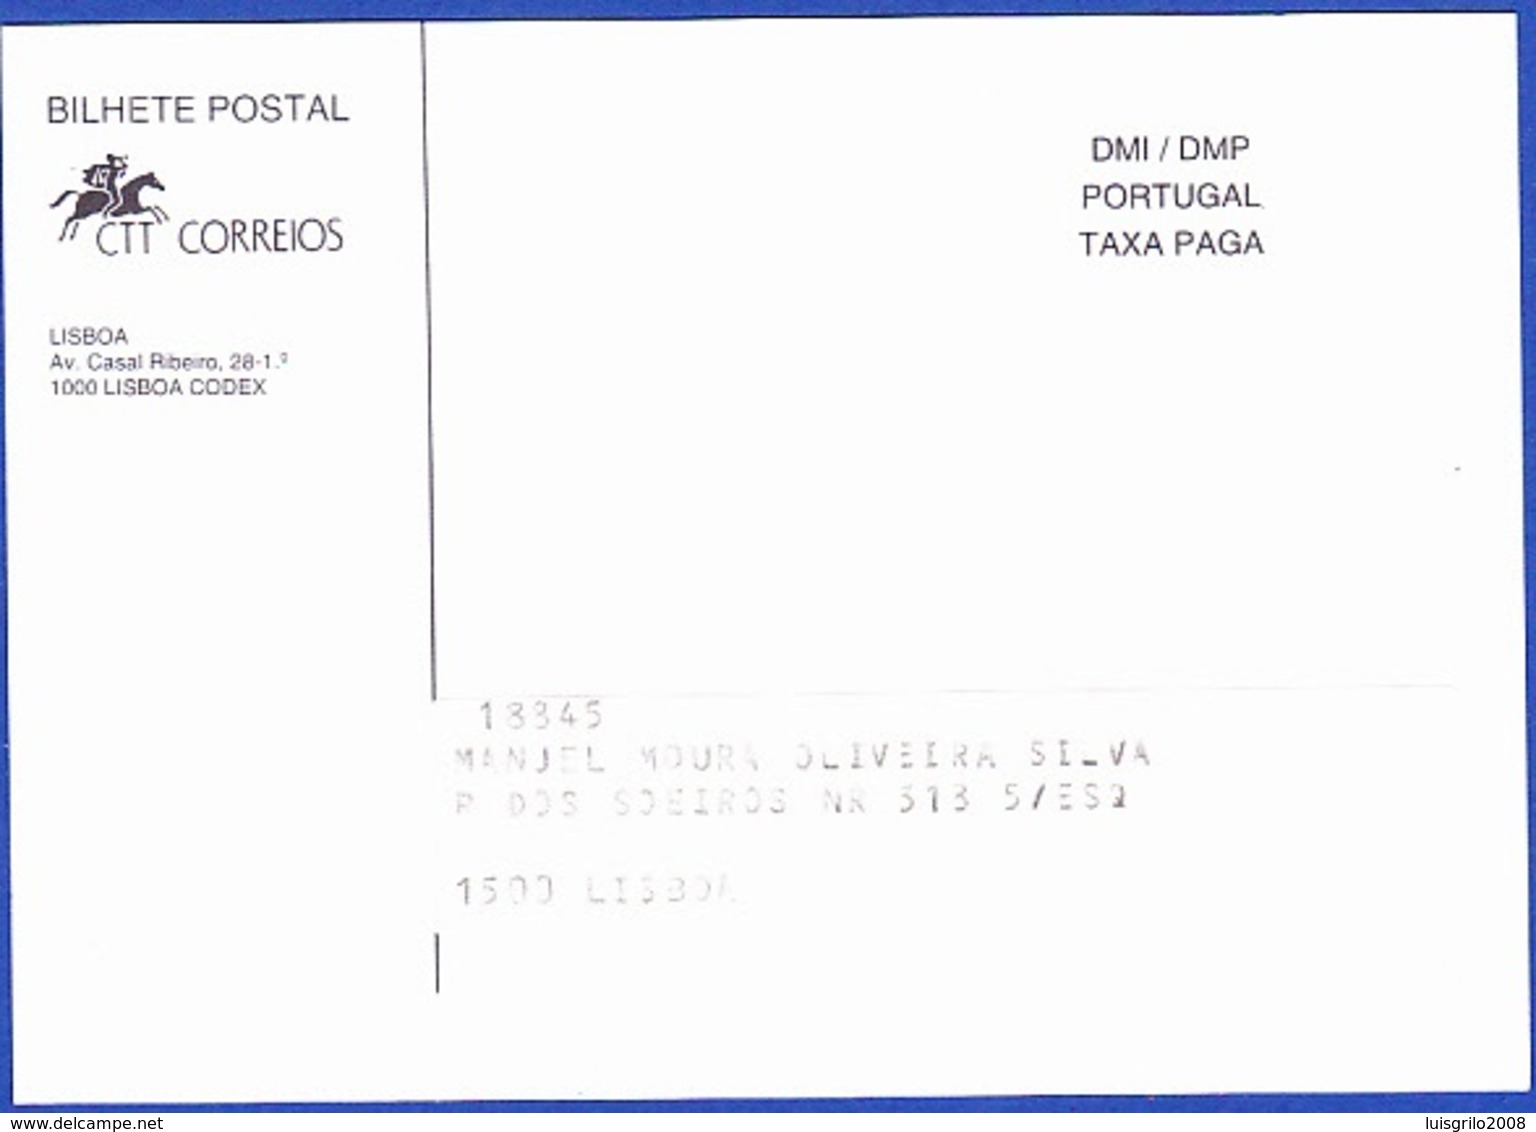 CTT Correios, Bilhete Postal, 1996 - TAXA PAGA - Covers & Documents